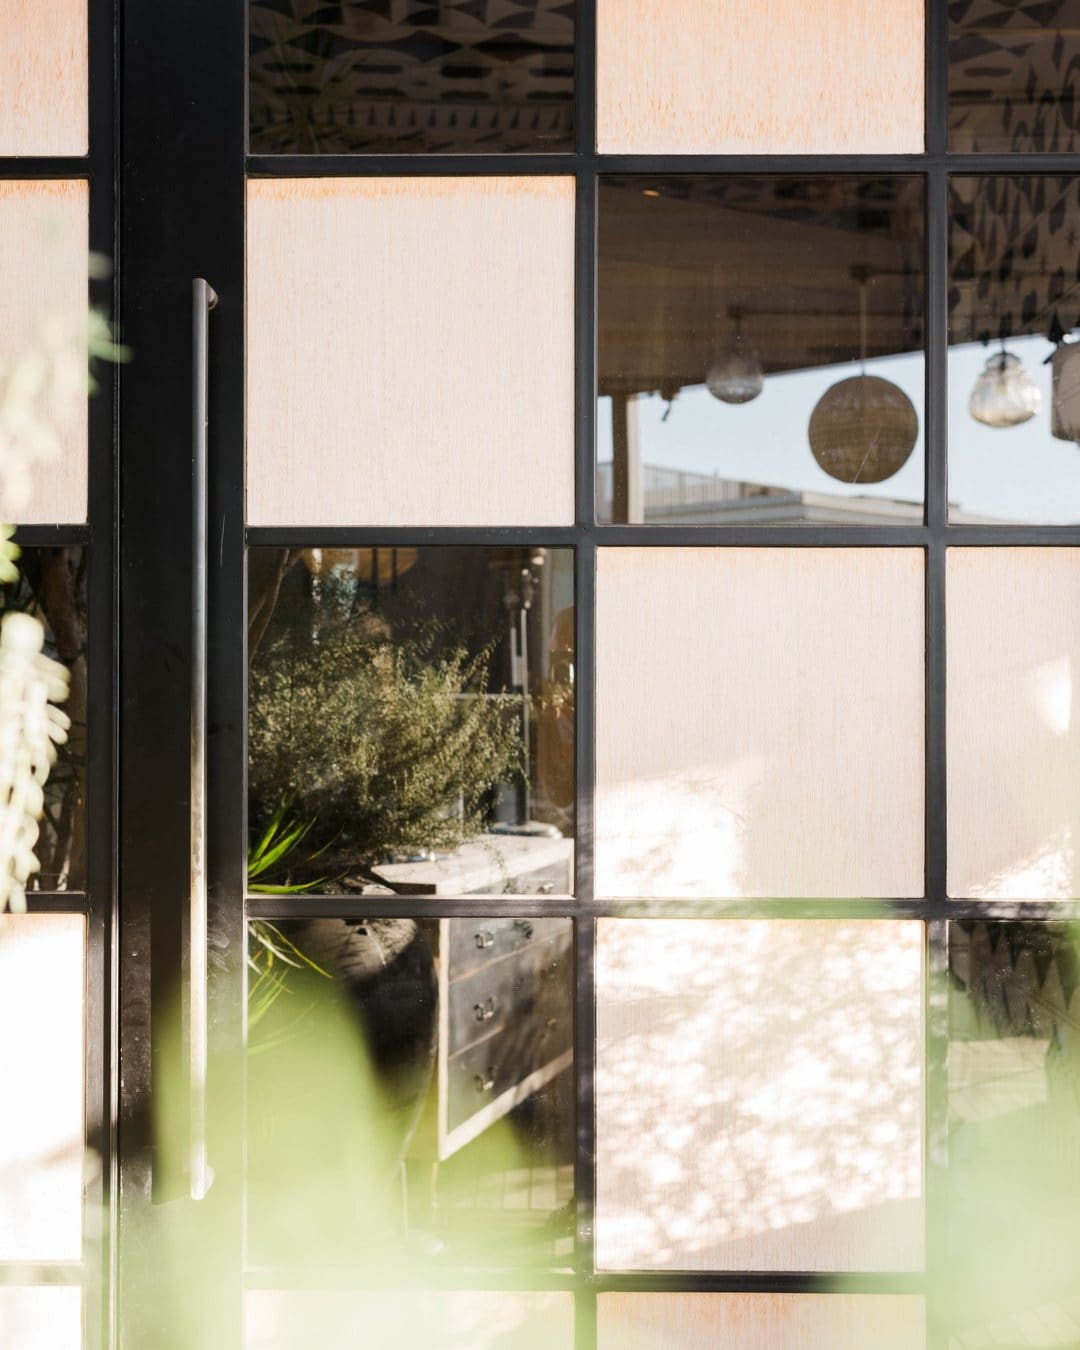 The interiors of Margot in Culver City seen through a door reflection